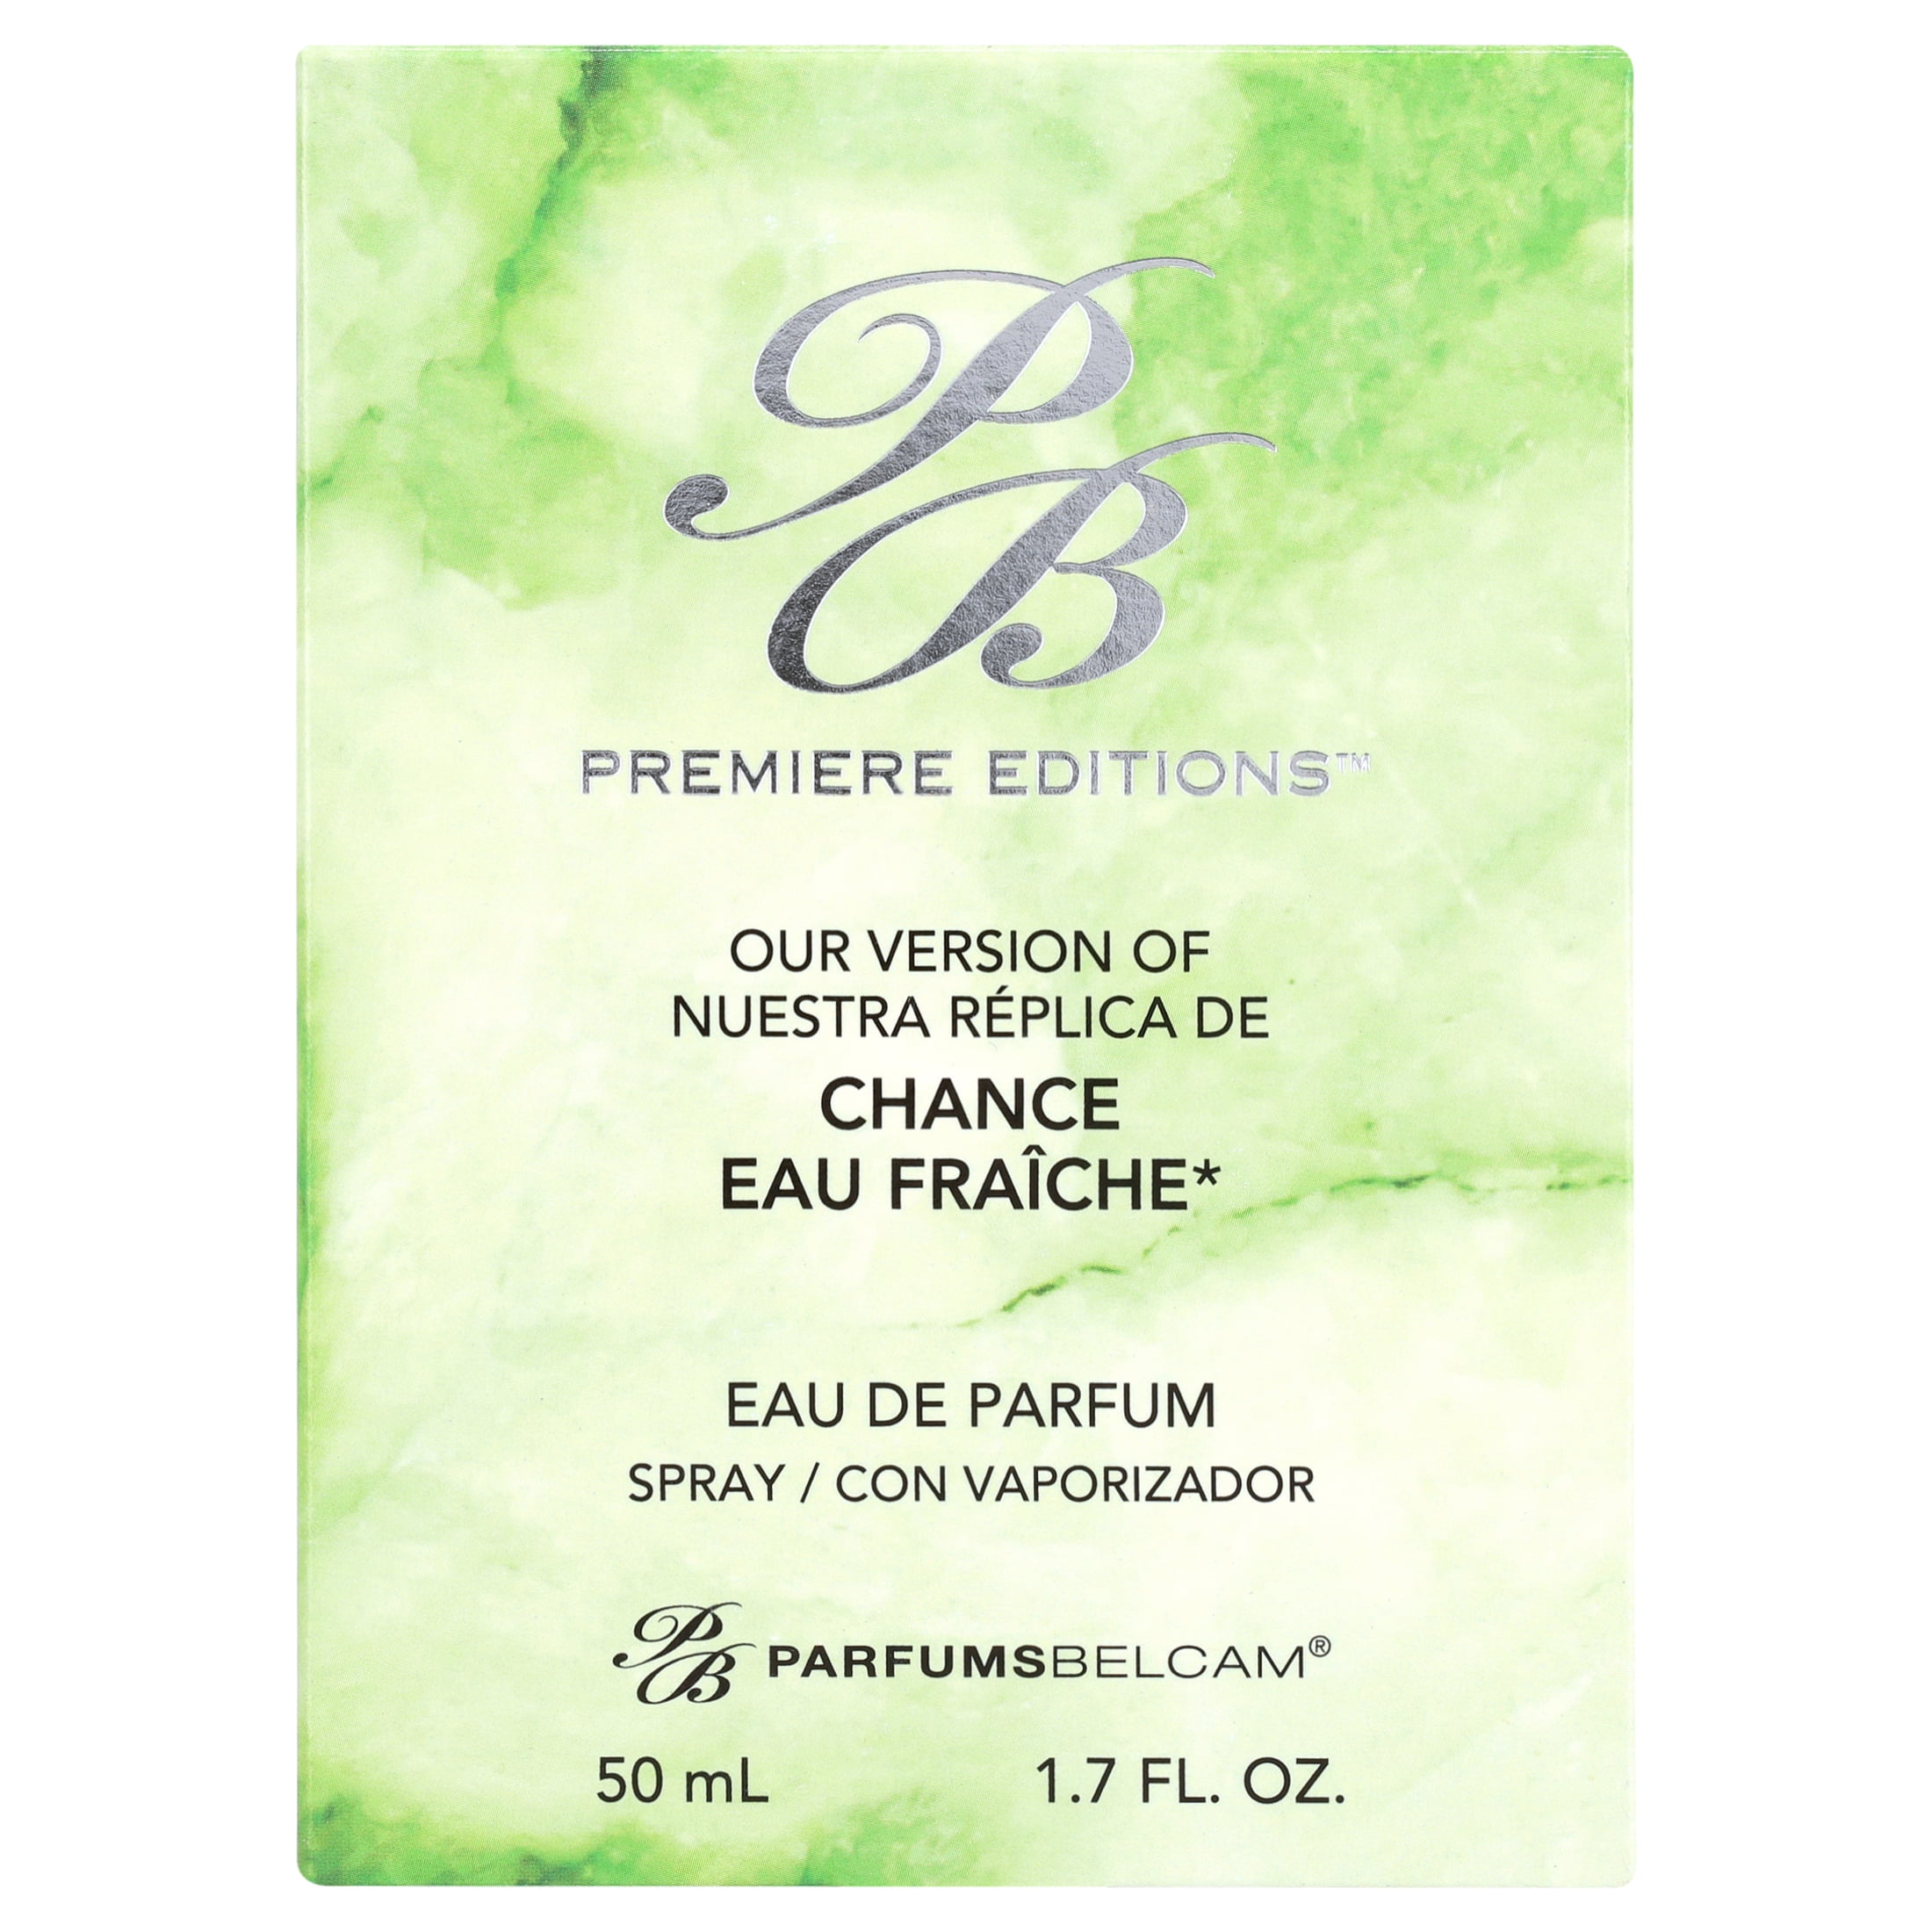 American Fragrance Direct Versace Man Eau Fraiche By Gianni Versace Edt Spray 3.4 Oz